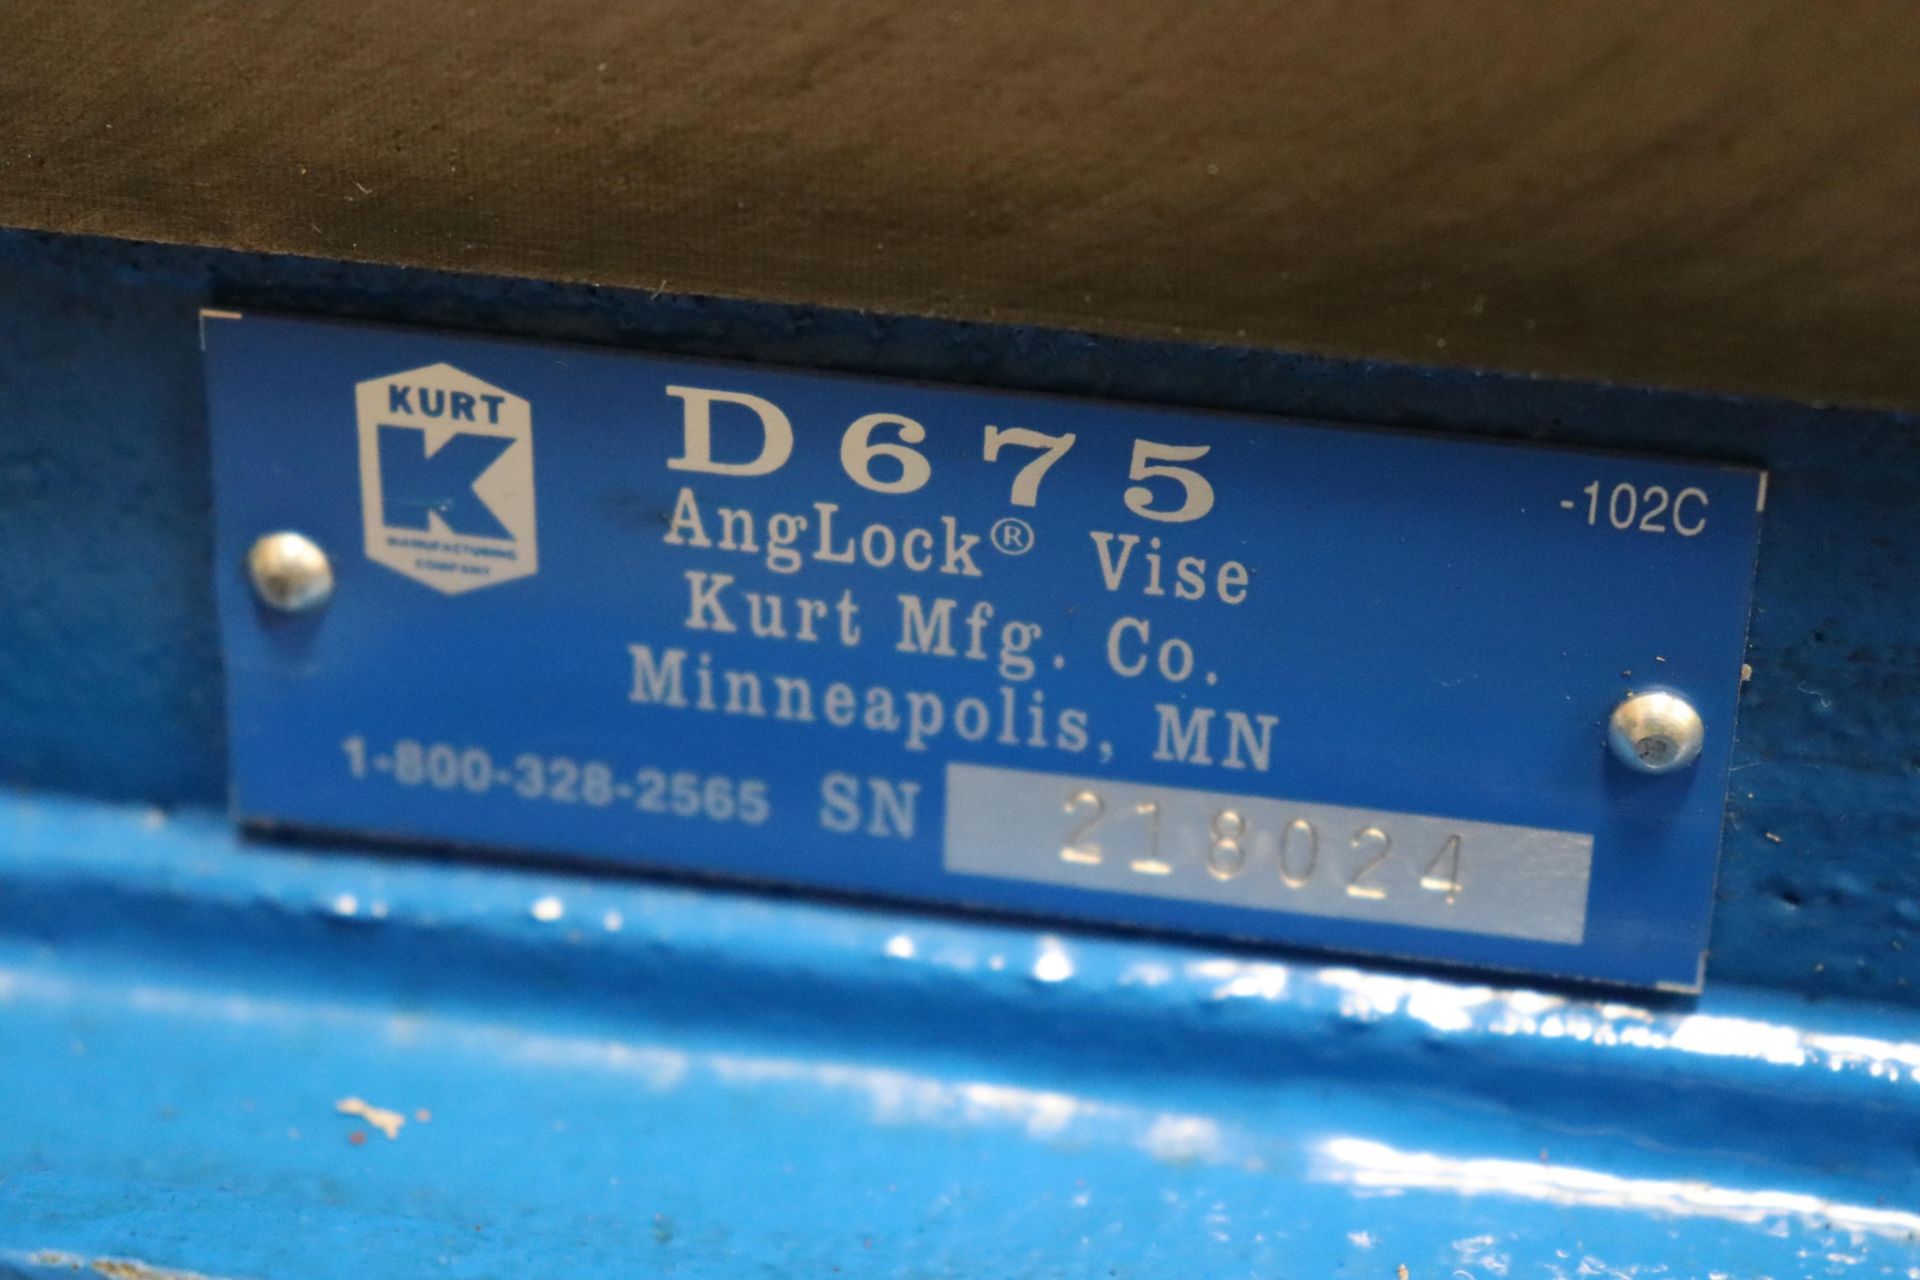 Kurt D-675 6" milling vise - Image 6 of 6